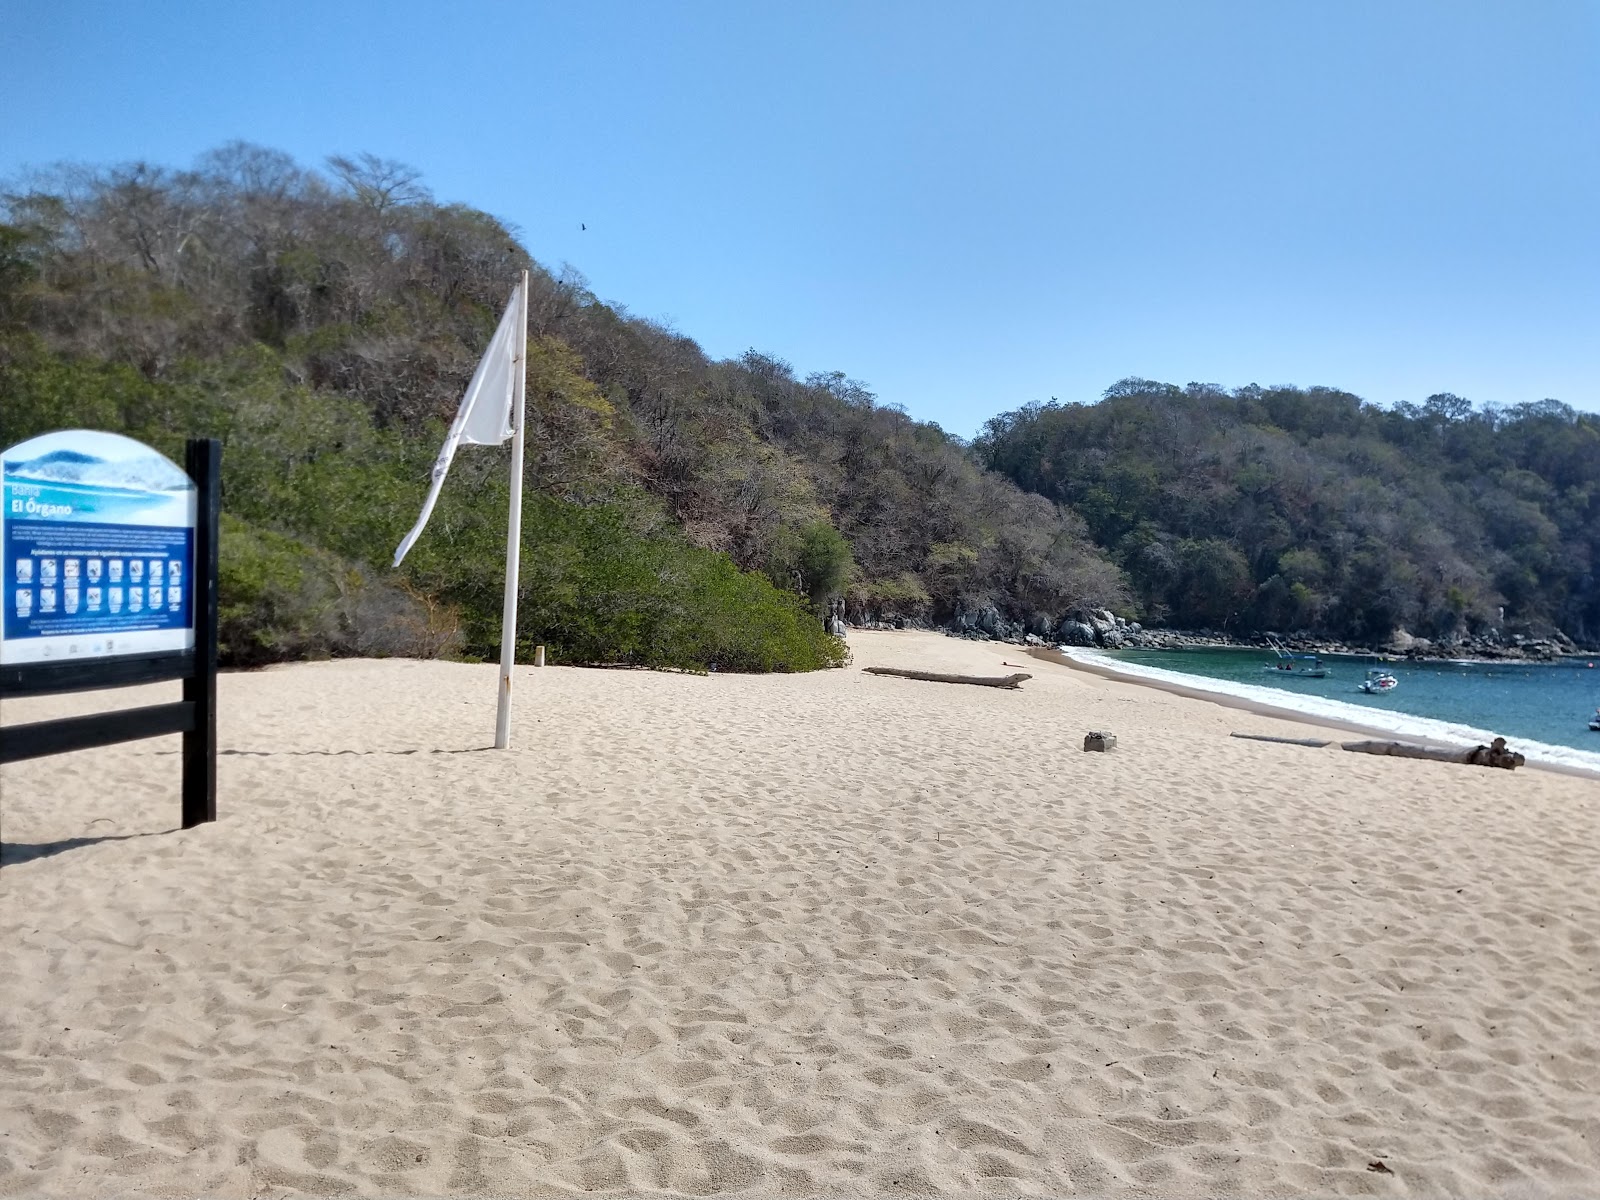 Foto de Organo beach - lugar popular entre os apreciadores de relaxamento